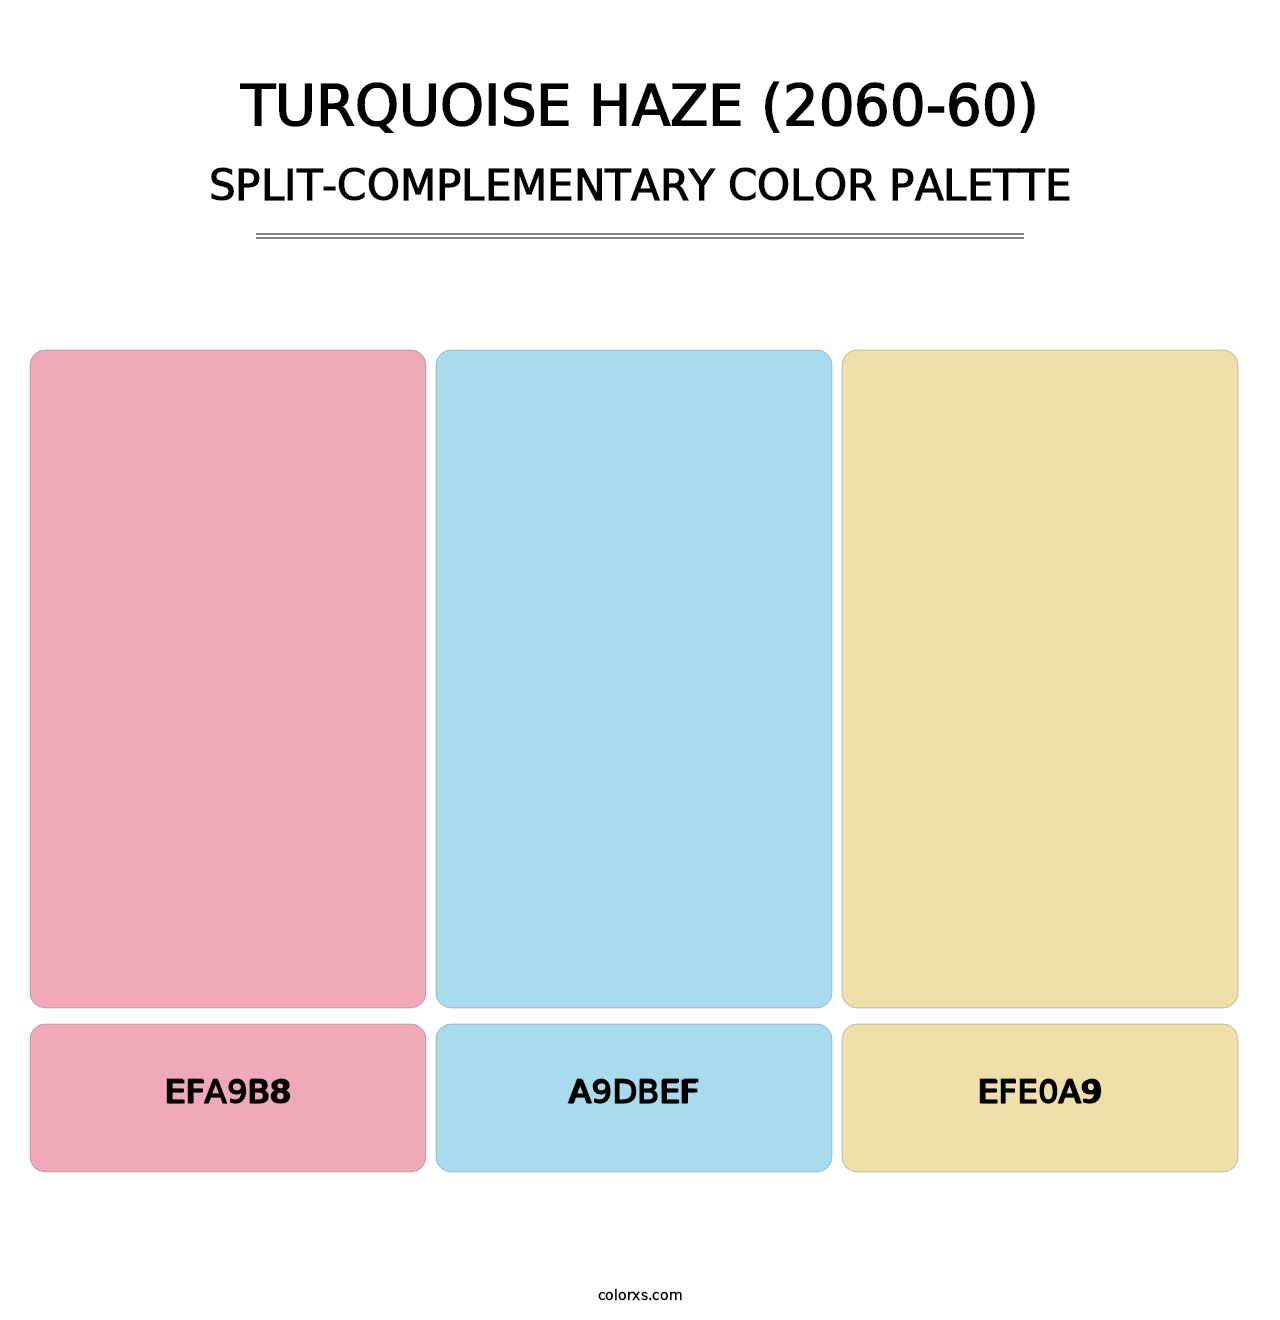 Turquoise Haze (2060-60) - Split-Complementary Color Palette